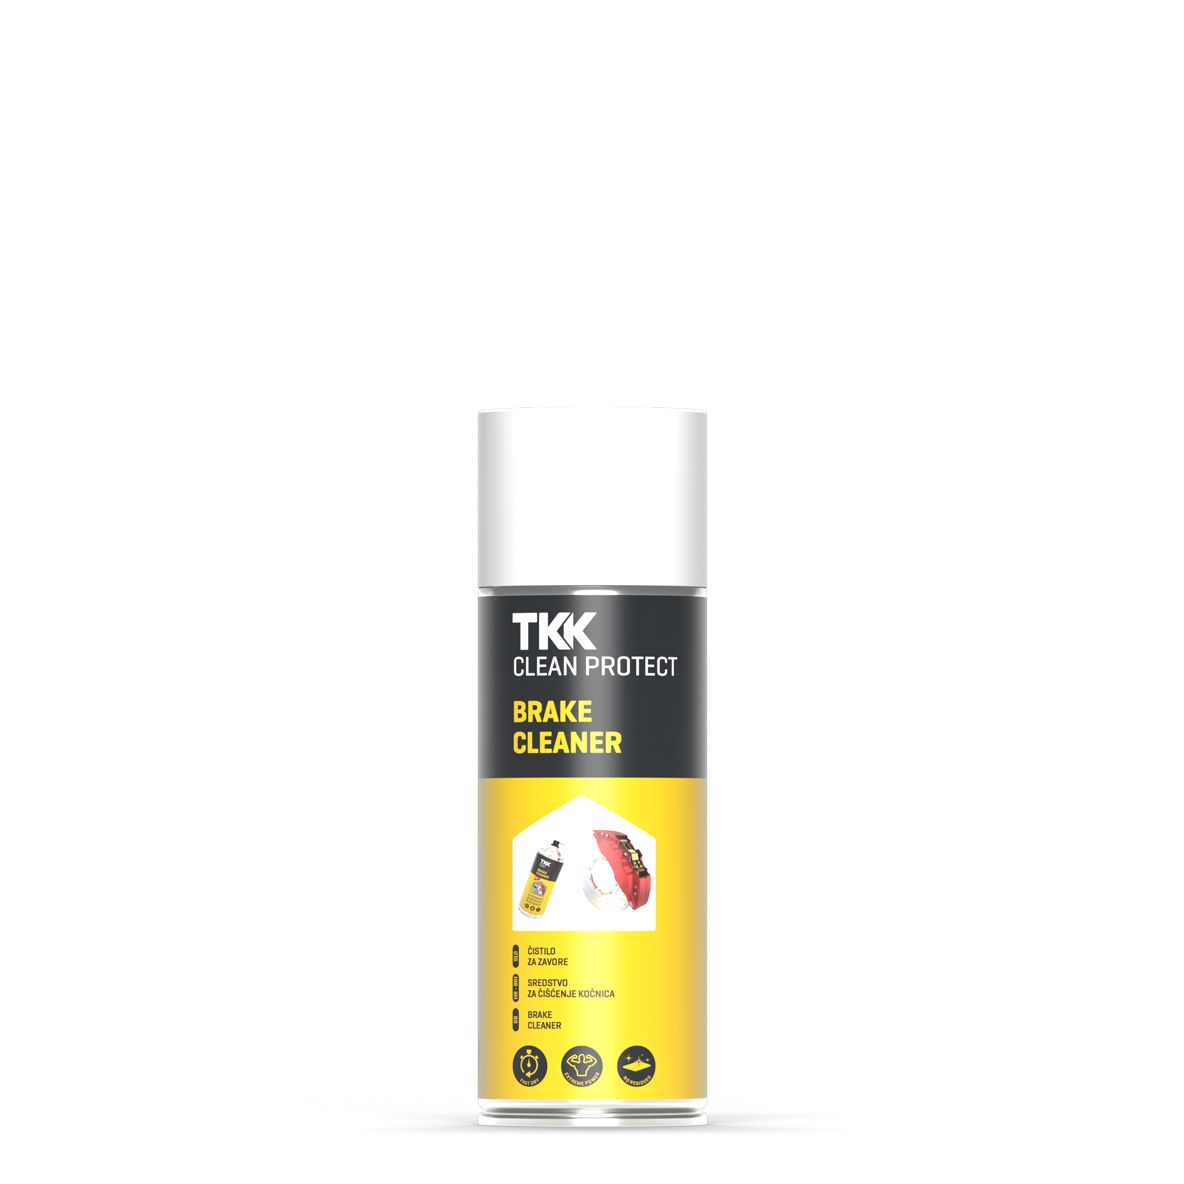 TKK Clean Protect Brake Cleaner